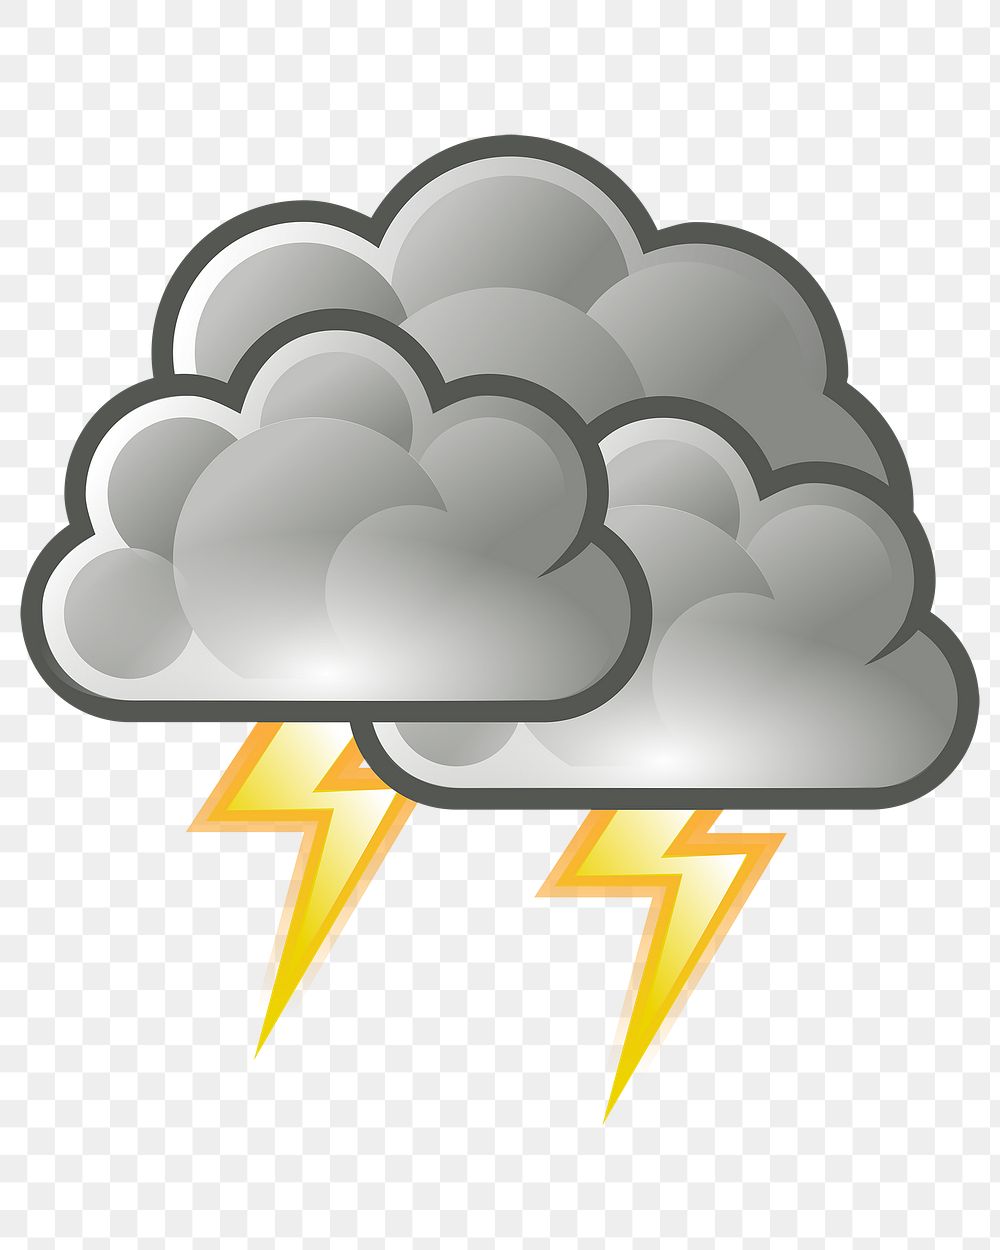 Thunder cloud png illustration, transparent background. Free public domain CC0 image.